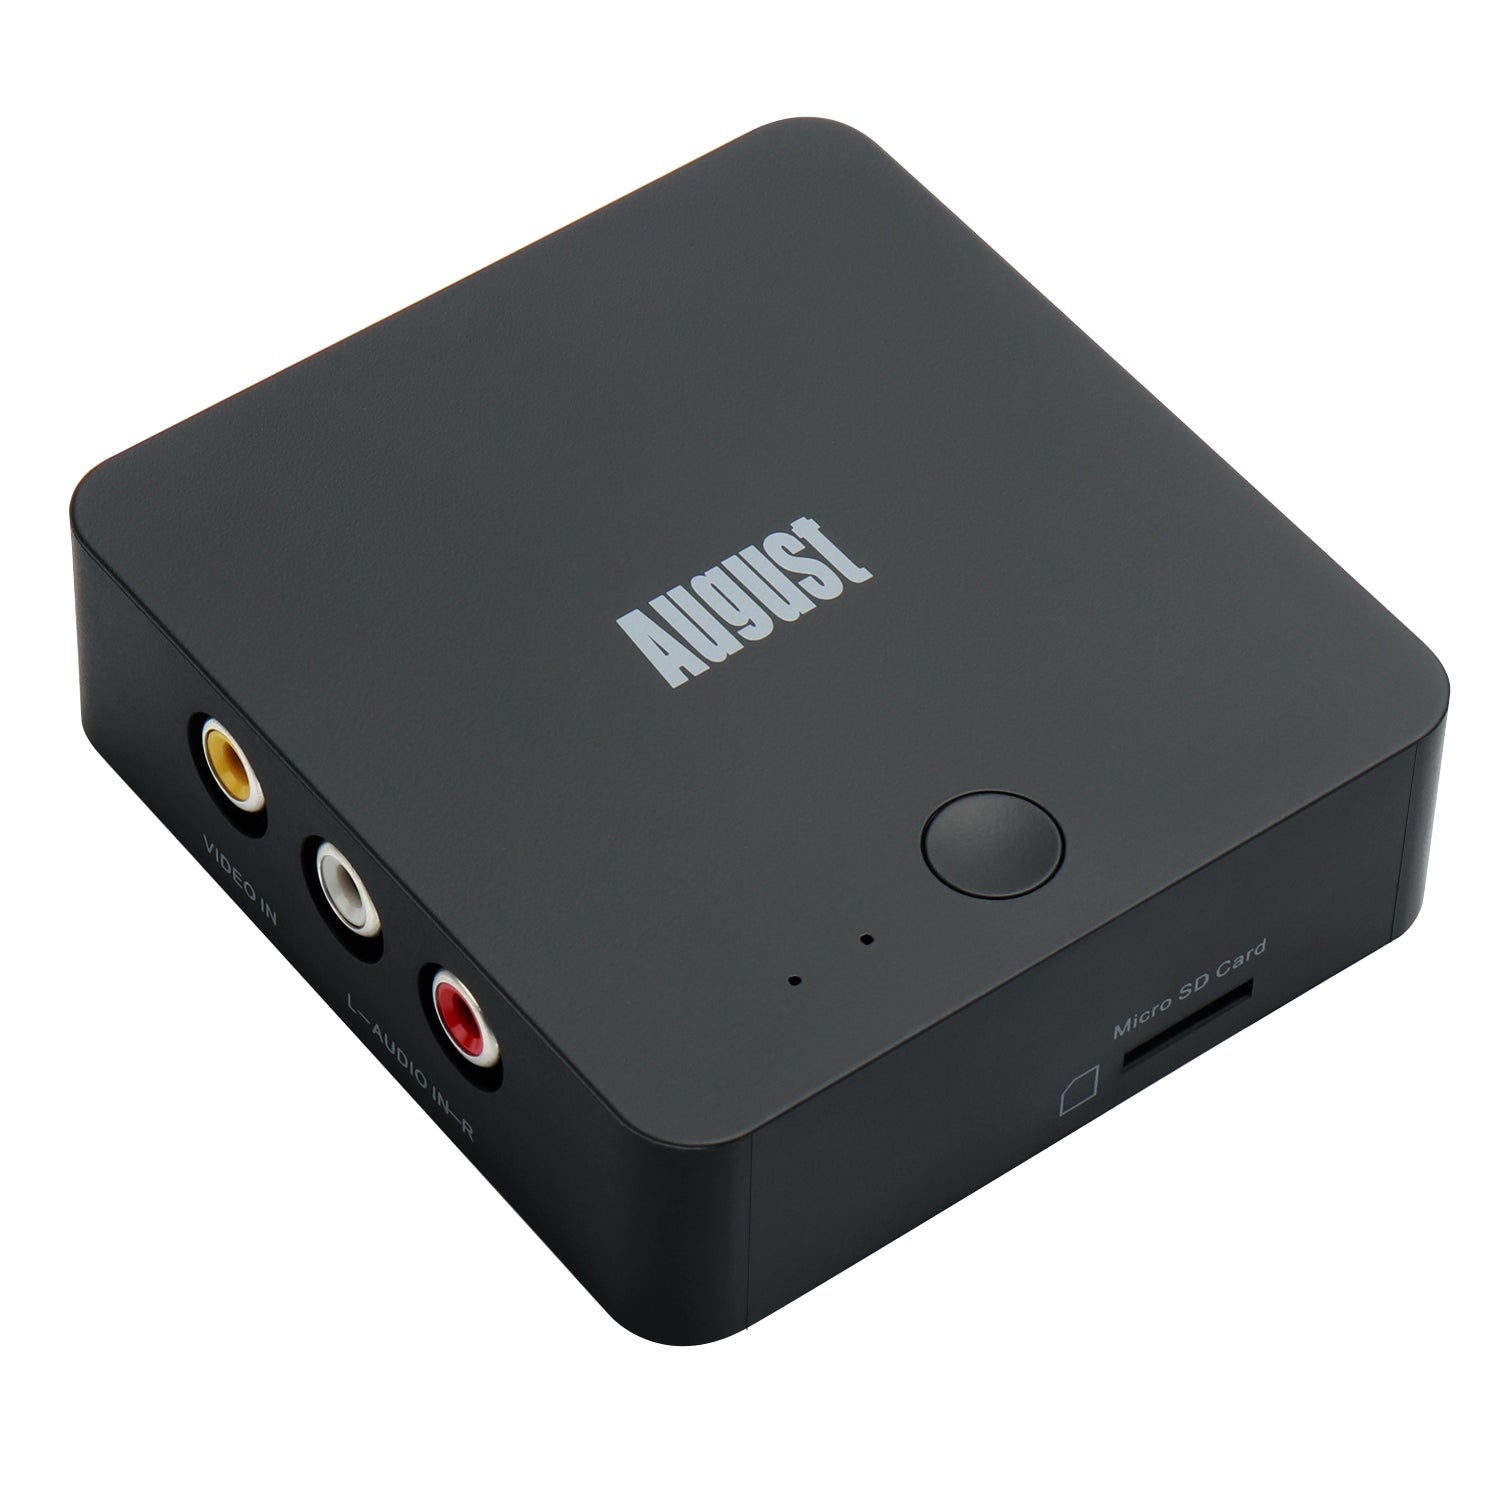  USB Audio Video Converter, VHS to Digital Converter